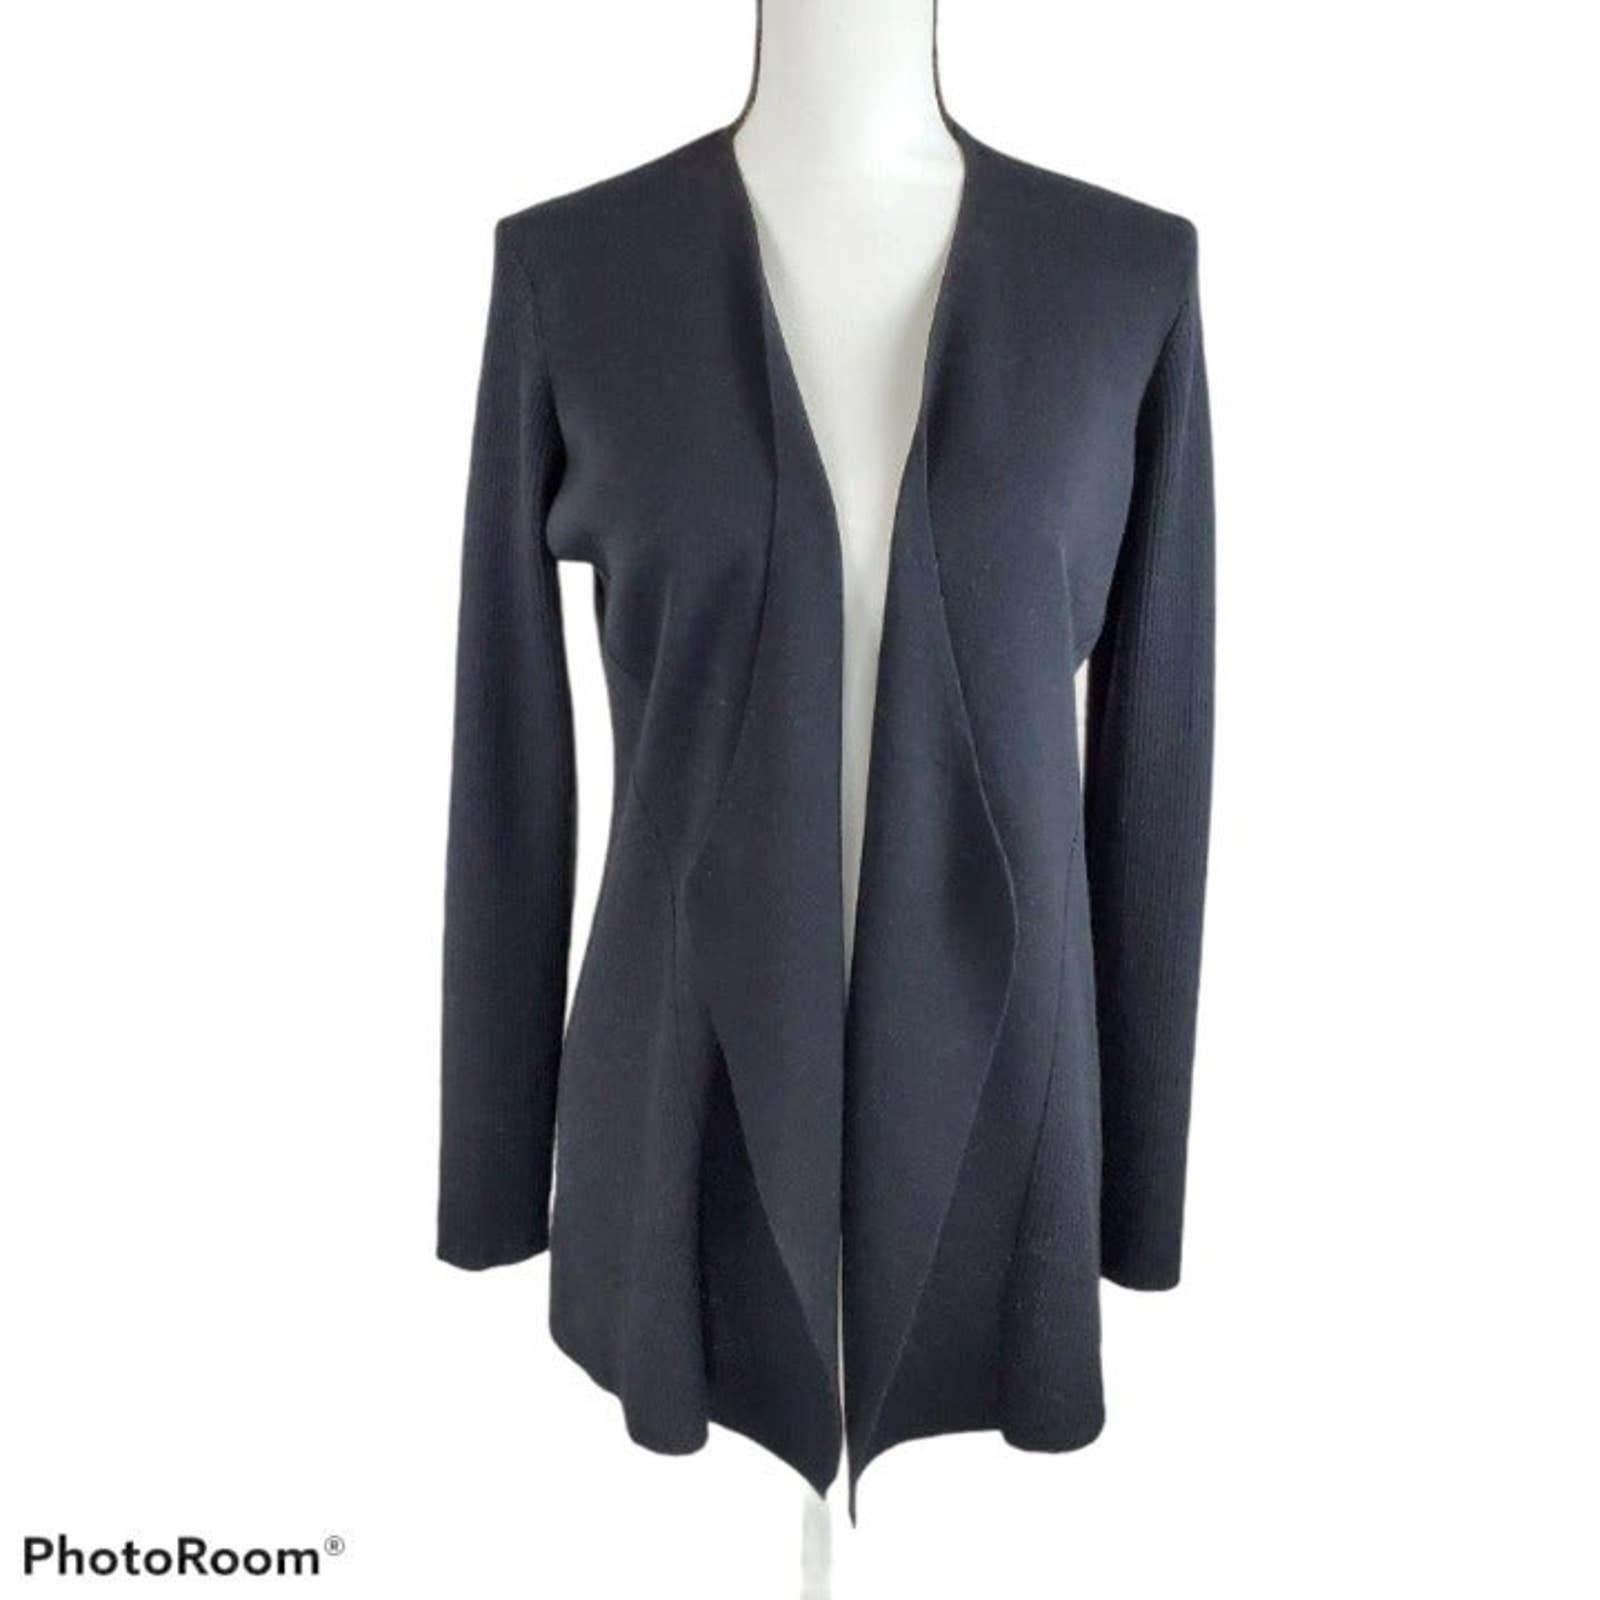 Cheap Eileen Fischer Black Wool Open Cardigan NbxELSkzA Everyday Low Prices